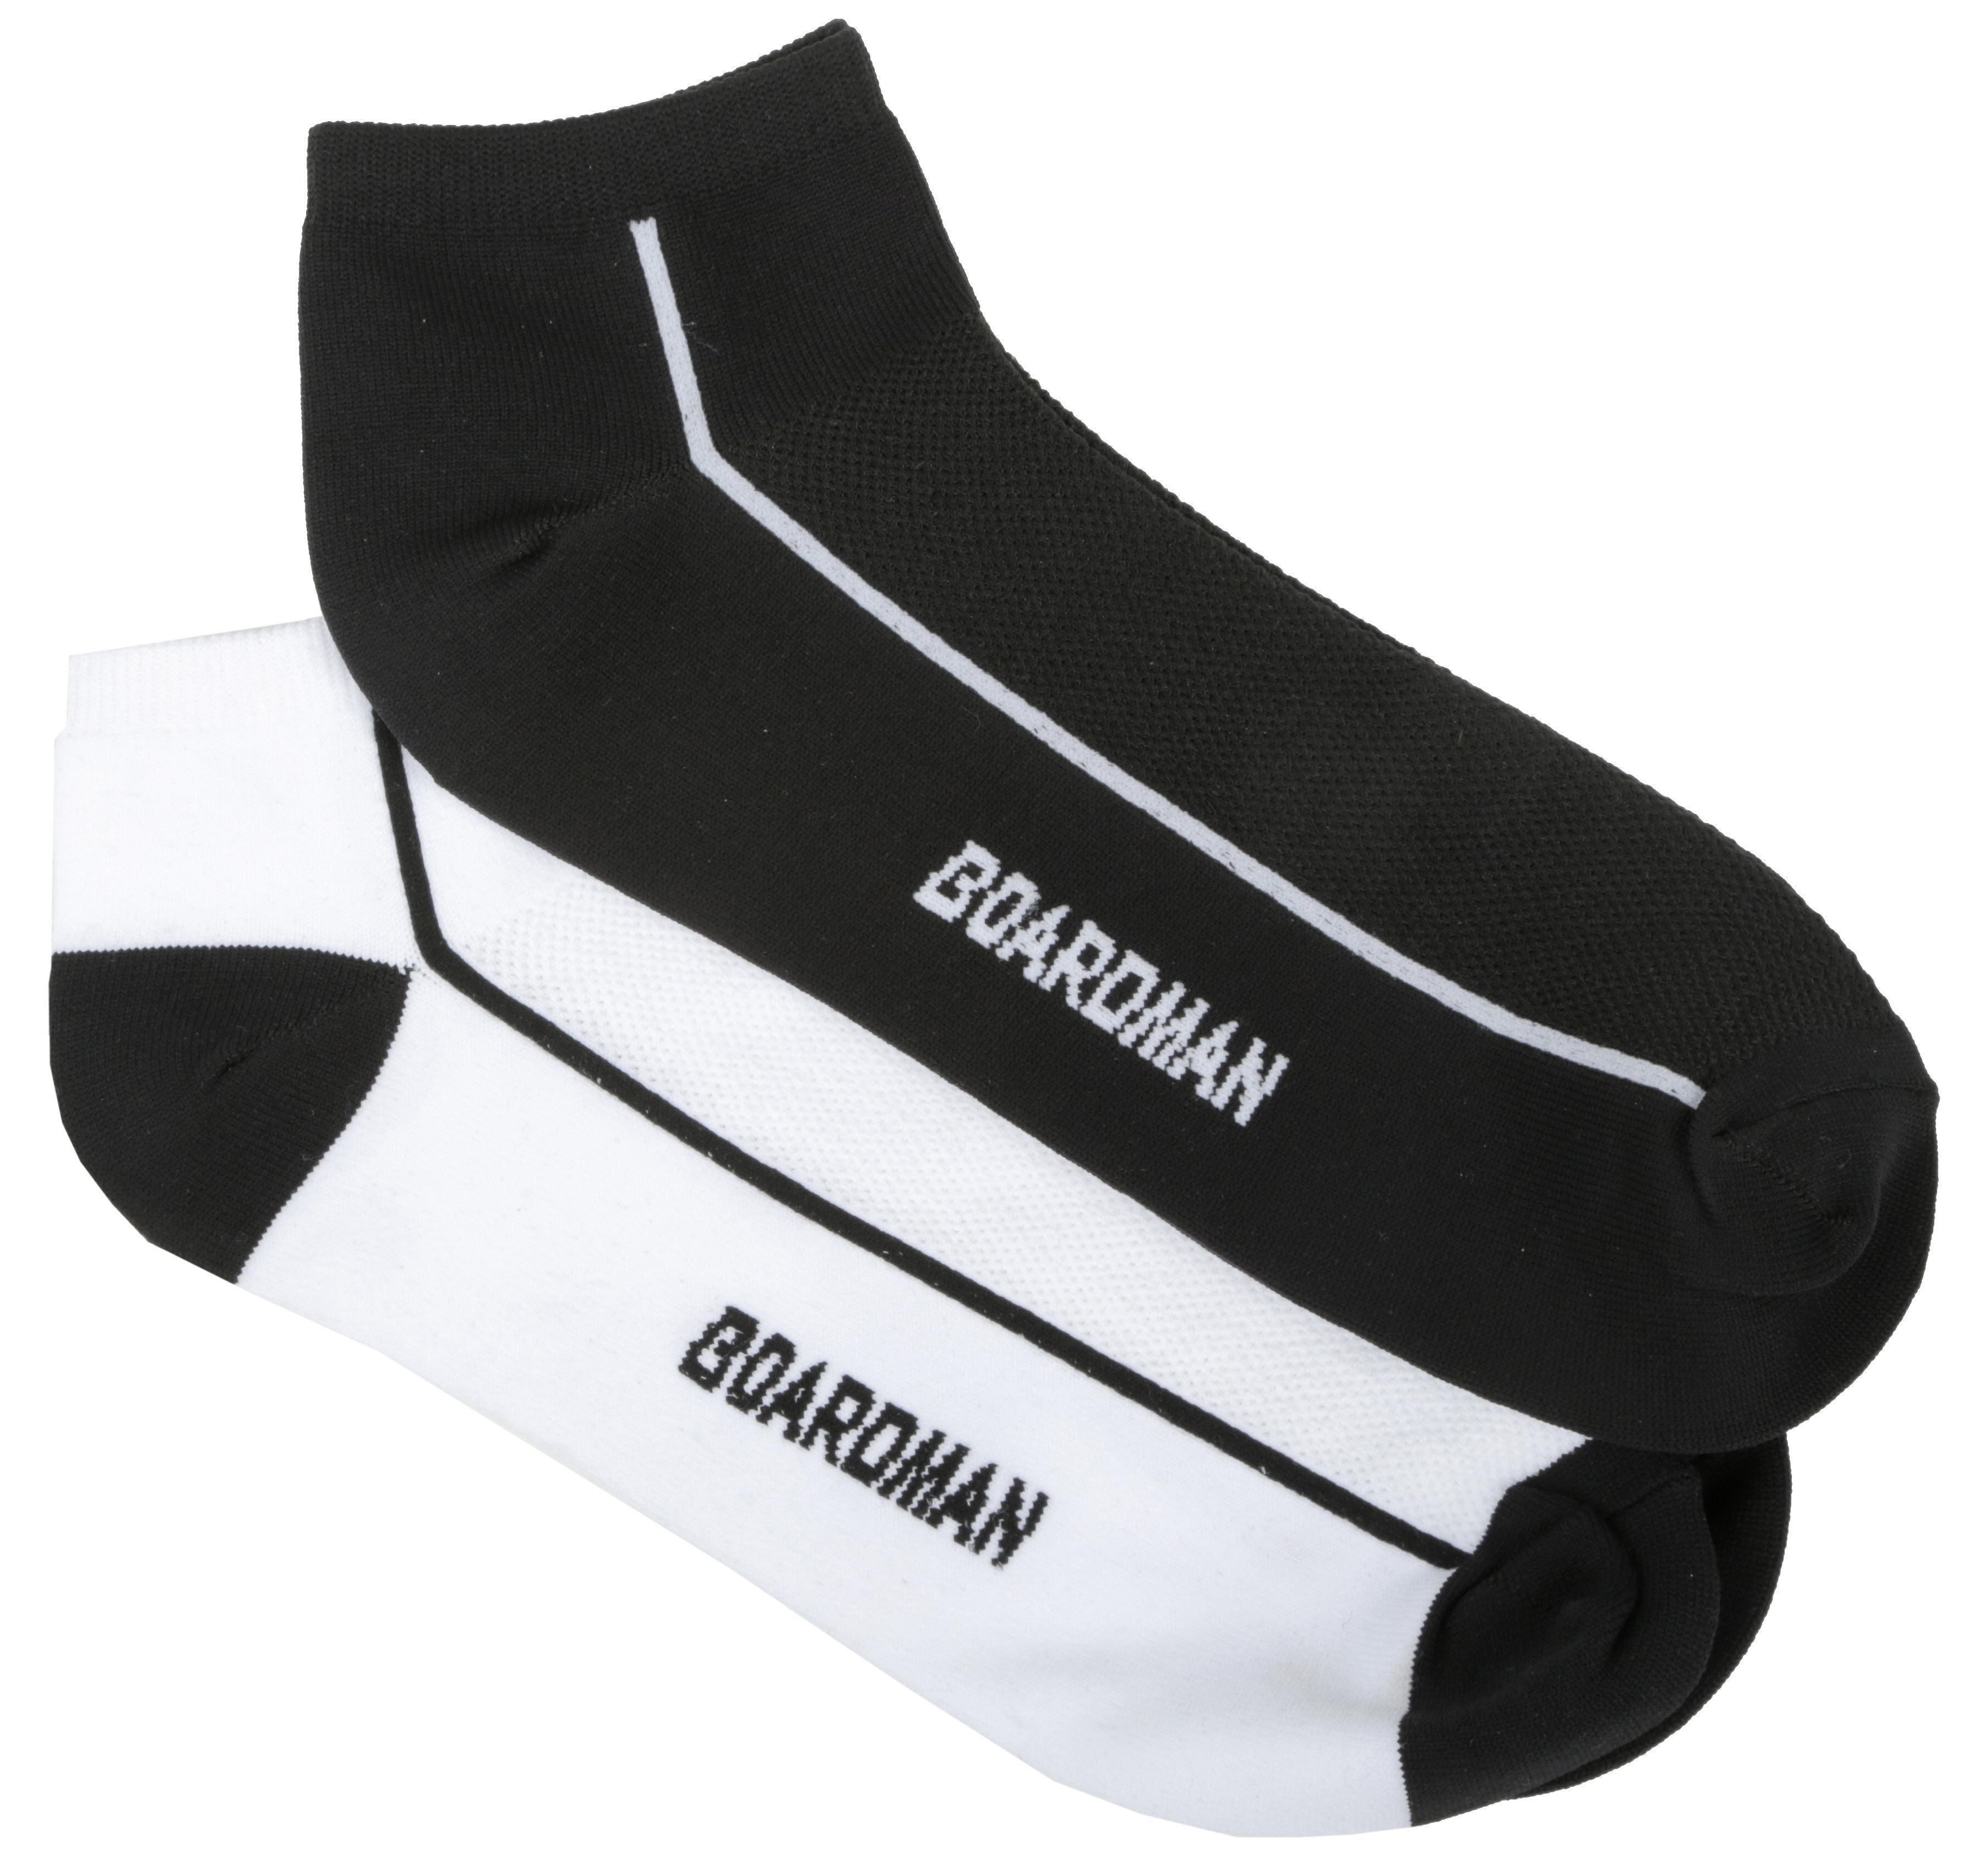 Boardman Unisex Trainer Socks - Small/Medium